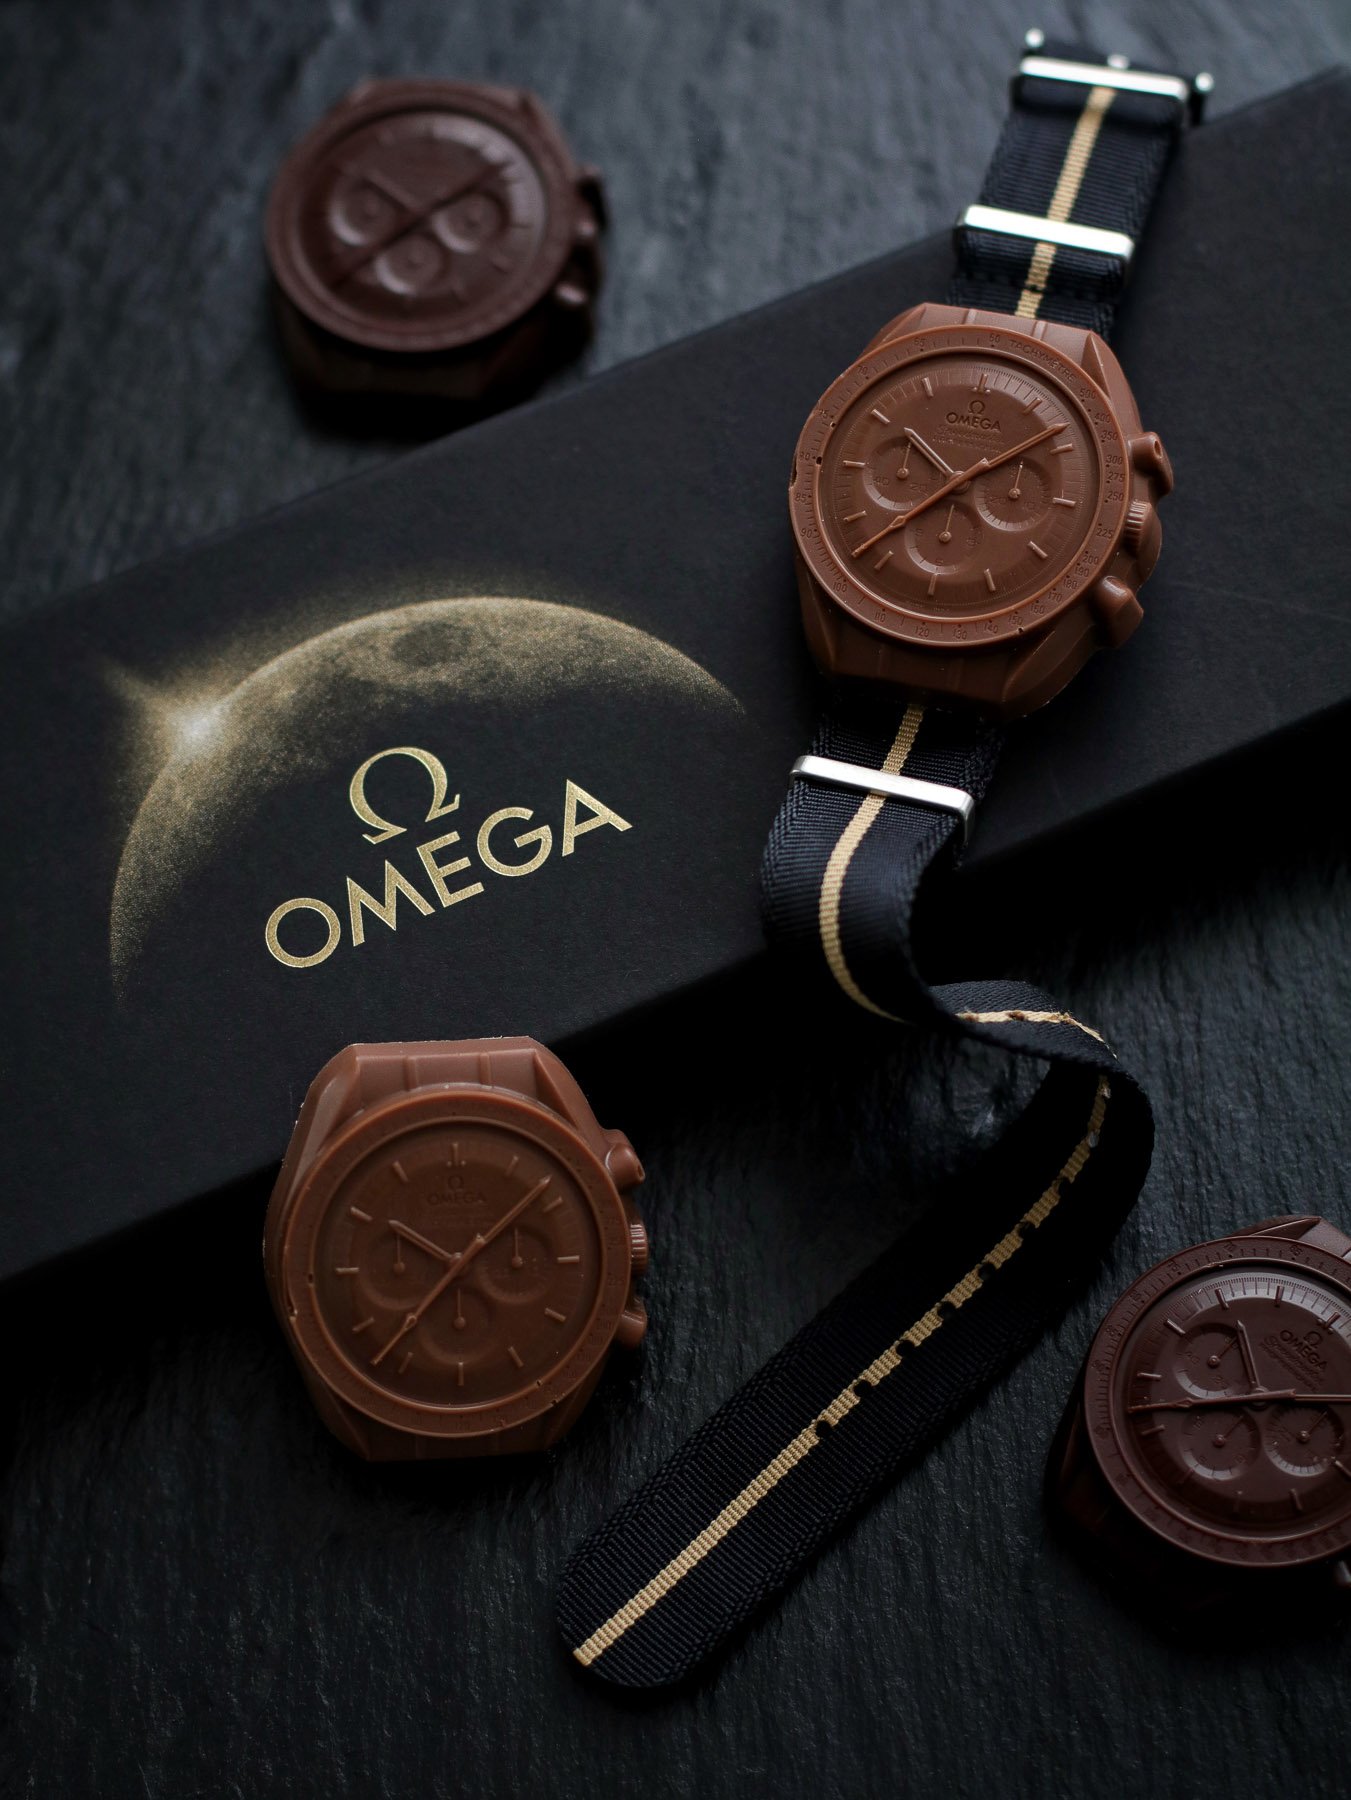 Omega chocolates for the Dutch GTG